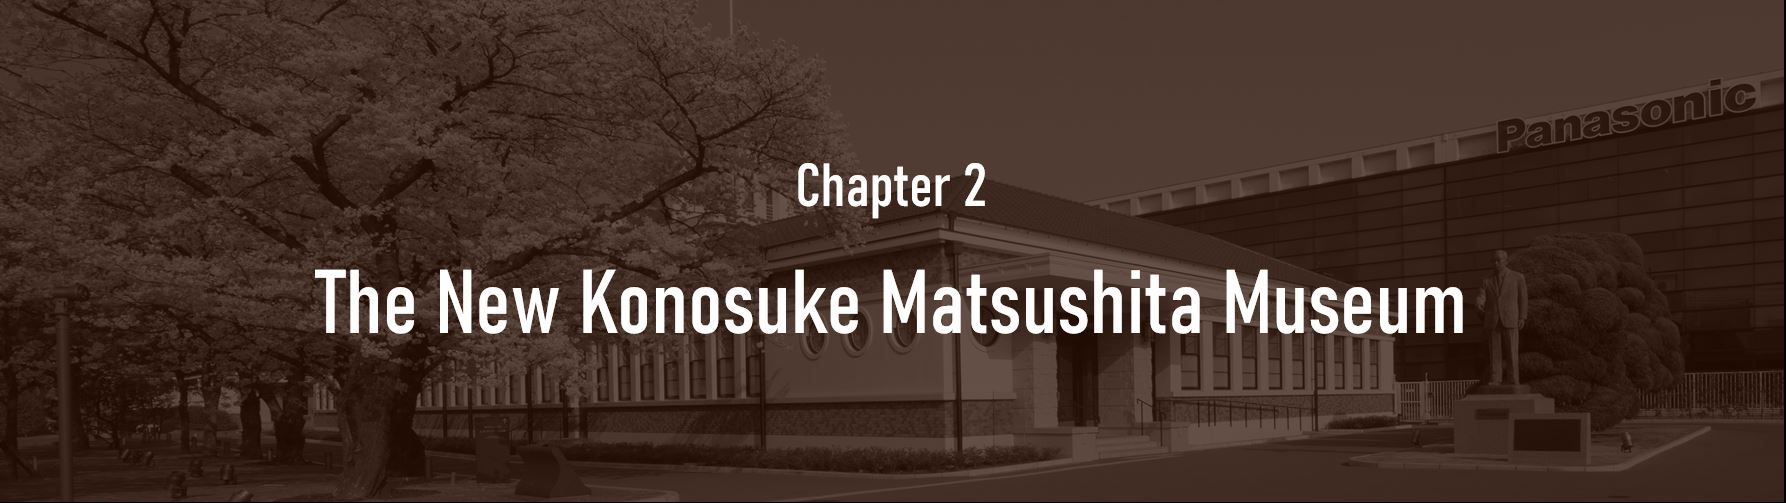 Chapter 2. The New Konosuke Matsushita Museum